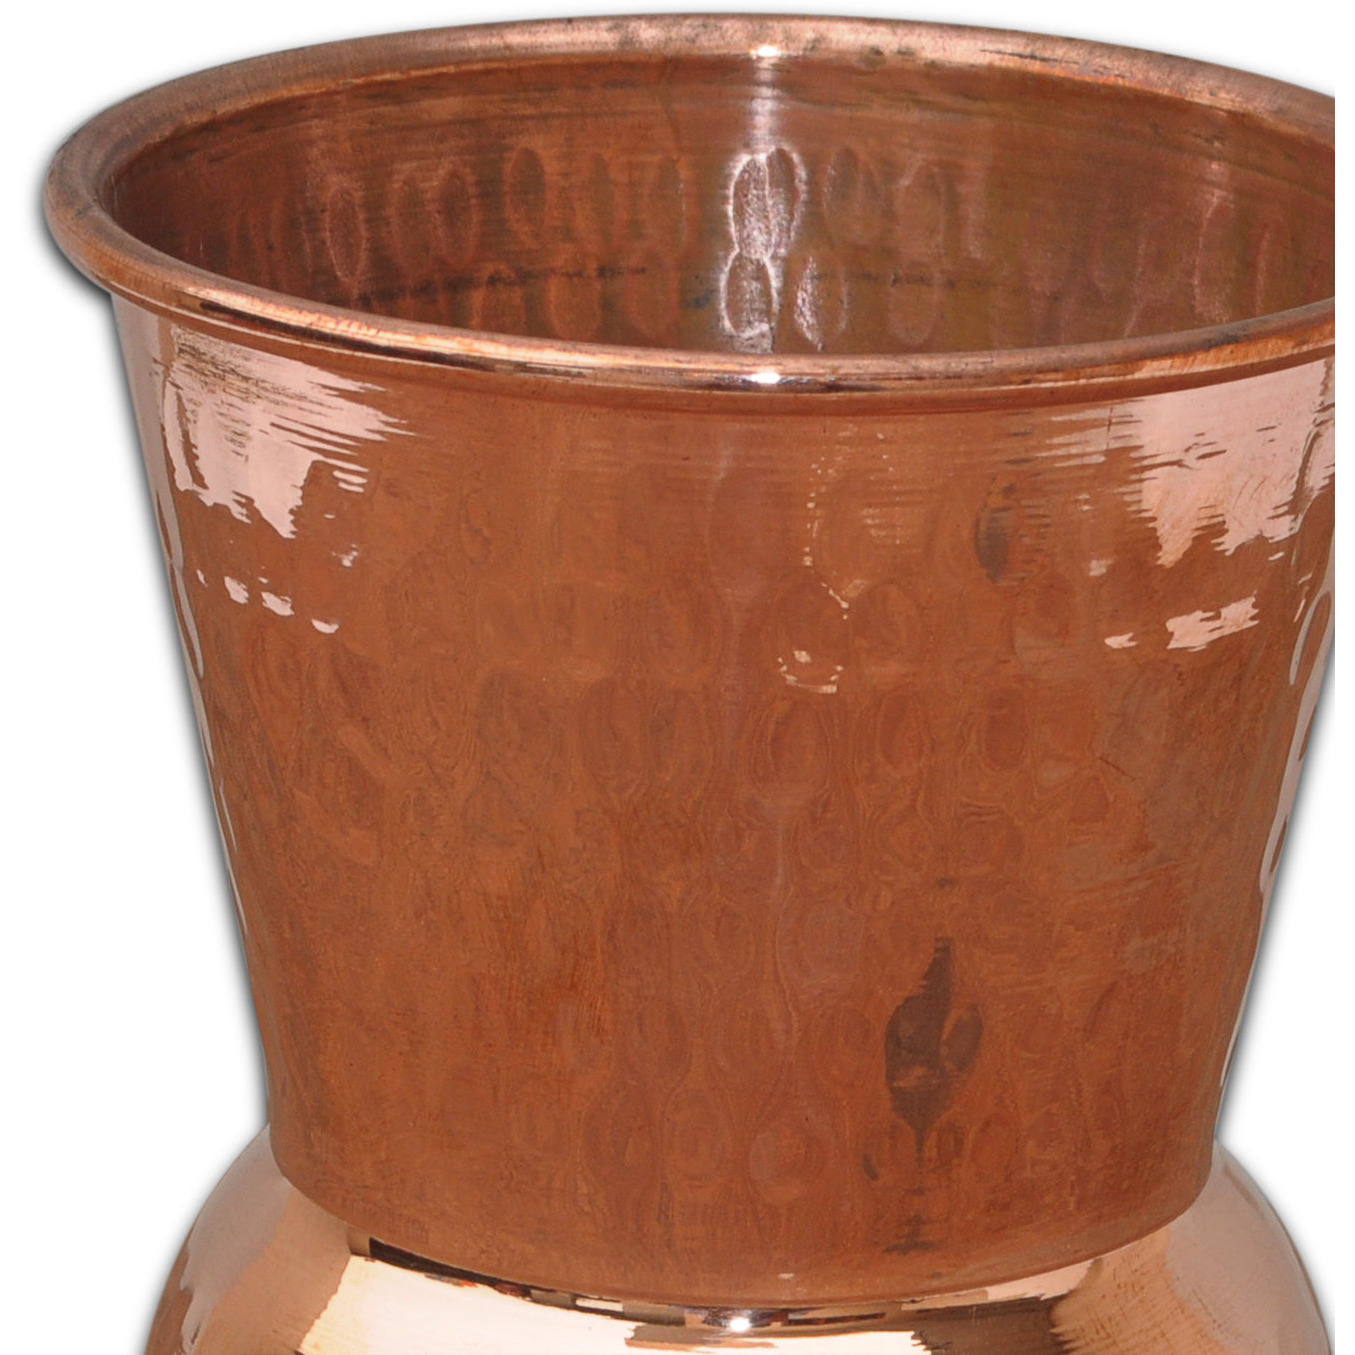 Set of 4 - Prisha India Craft B. Copper Muglai Matka Glass Hammered Style Drinkware Tumbler Handmade Copper Cups - Traveller's Copper Mug for Ayurveda Benefits